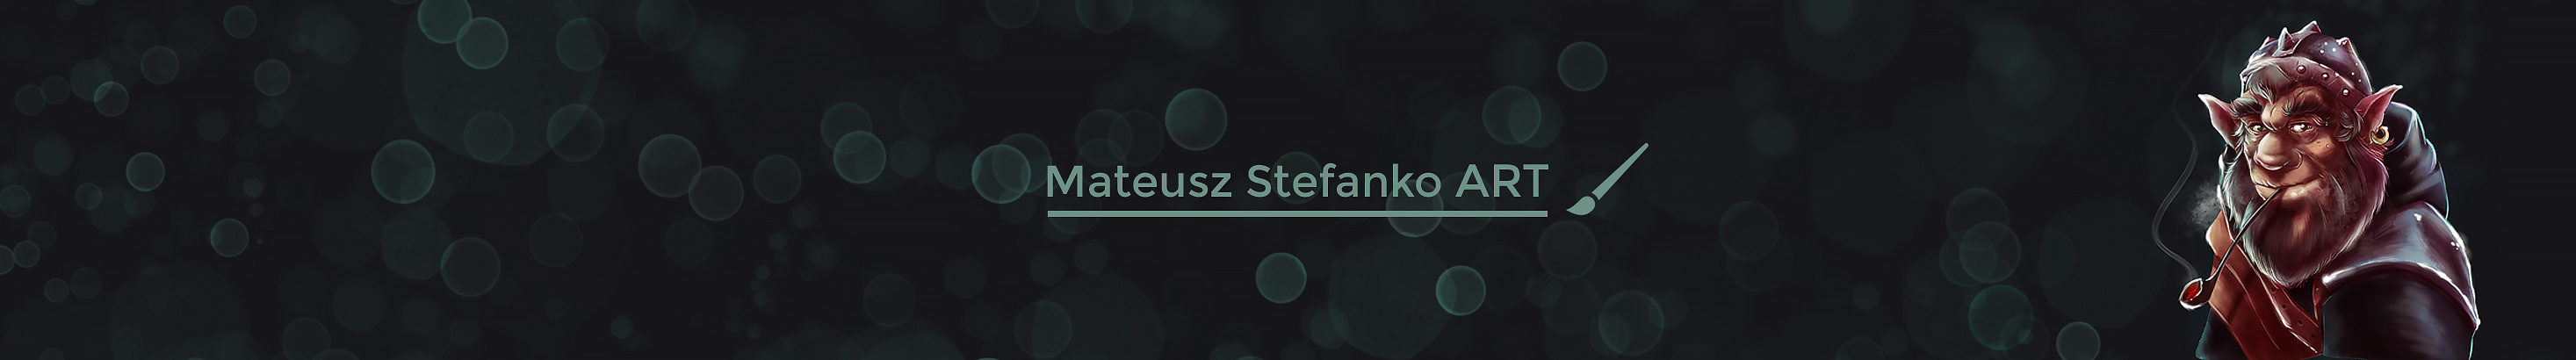 Mateusz Stefanko's profile banner